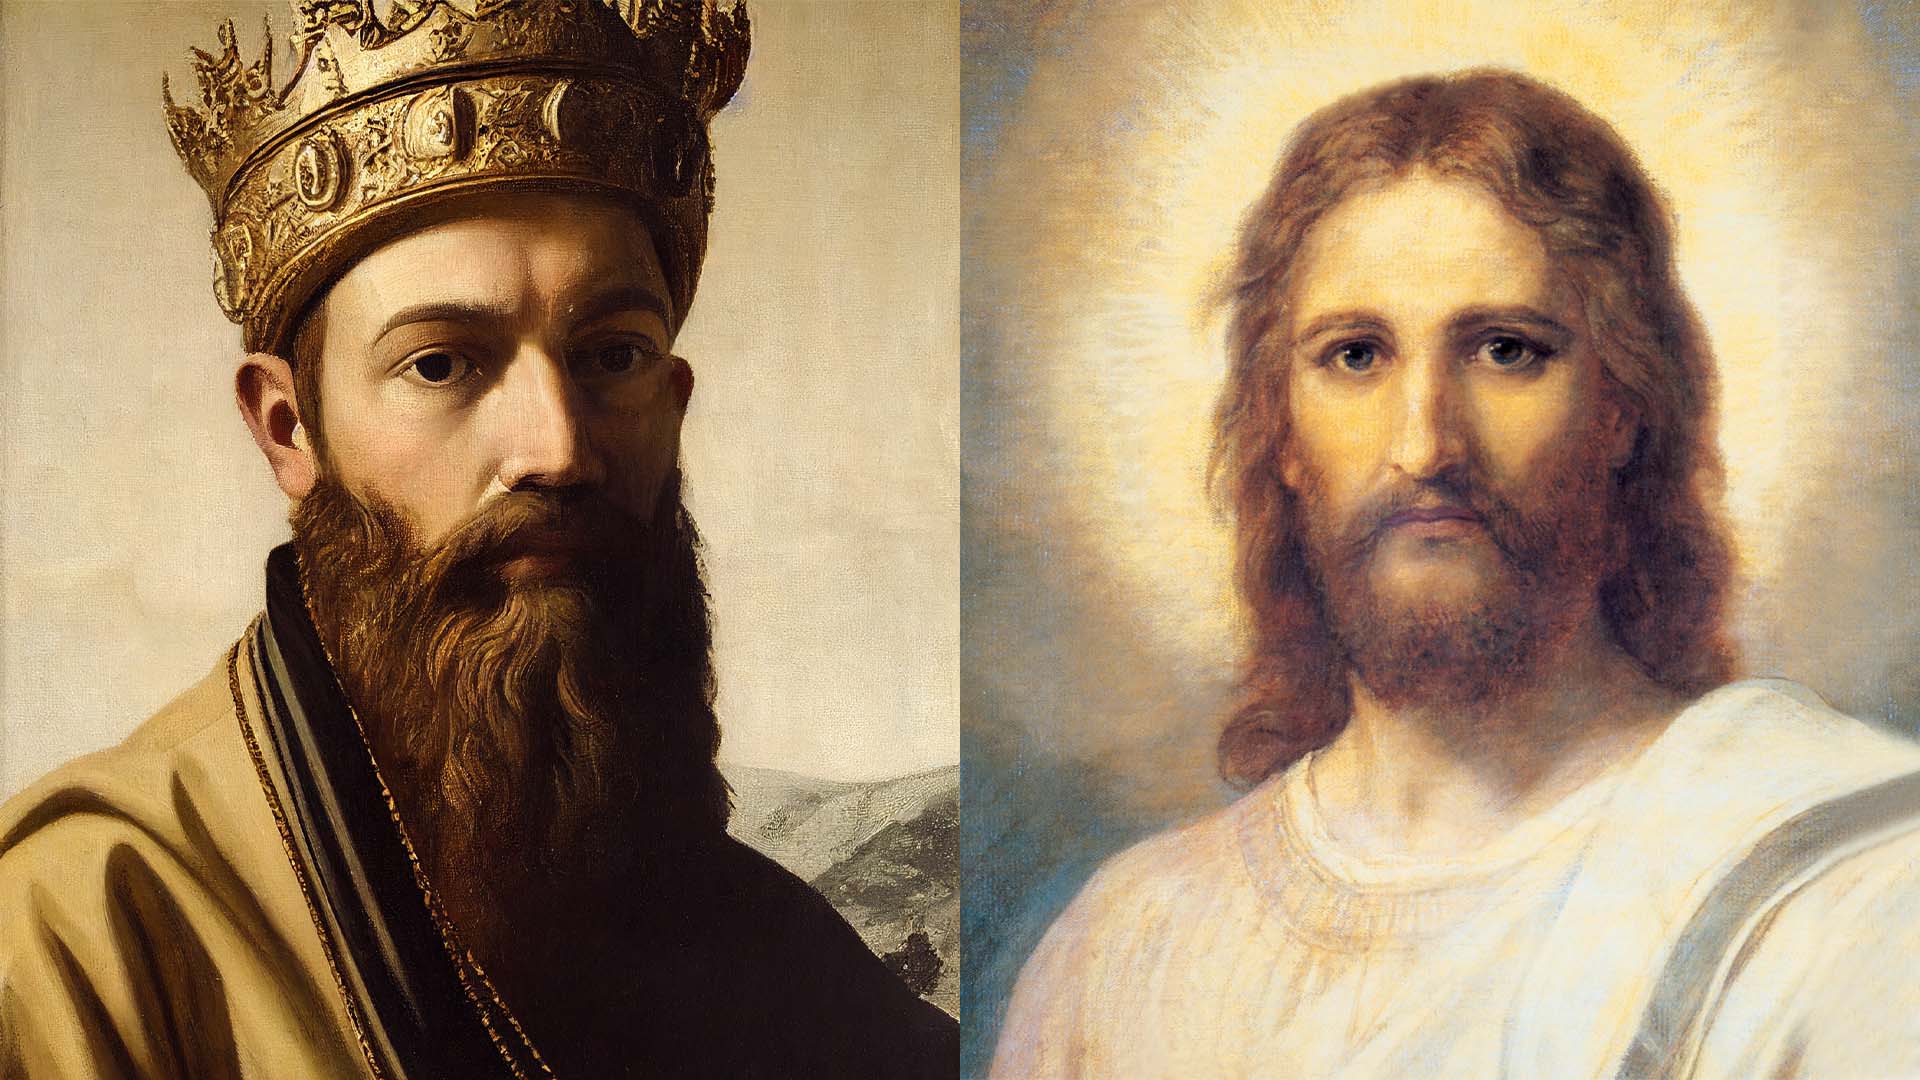 Left: Portrait of King Hezekiah generated by Midjourney. Right. Portrait of Jesus Christ by Heinrich Hofmann.